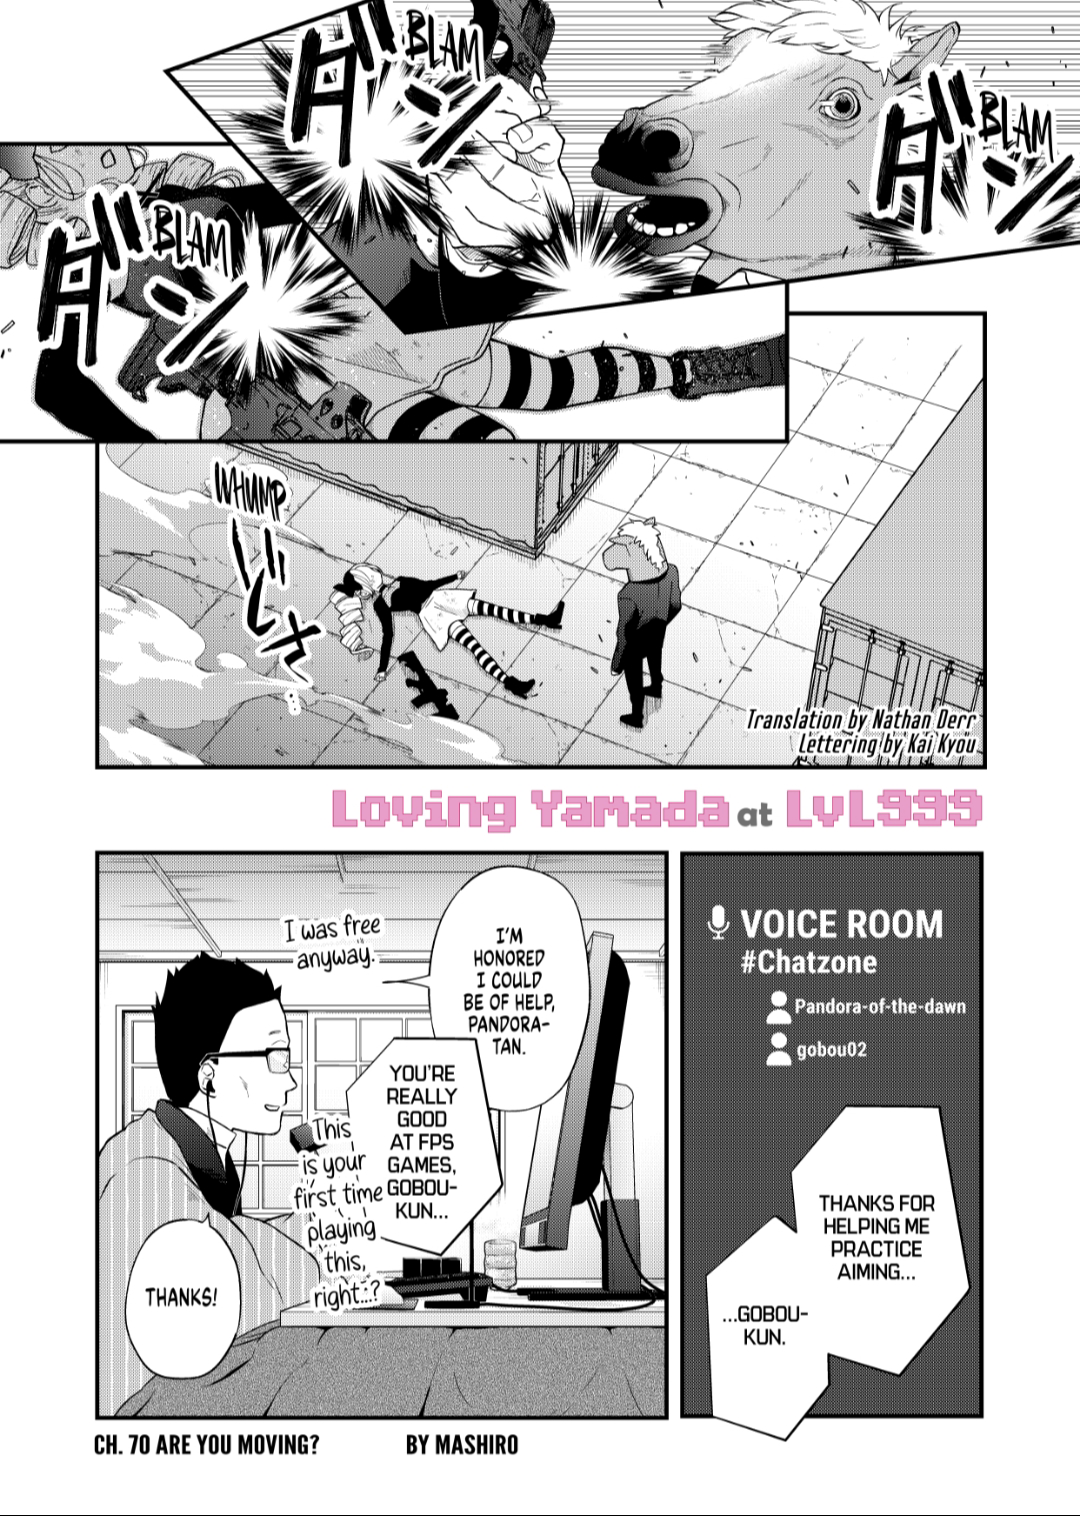 Yamada-kun to Lv999 no Koi wo Suru Chapter 43 Discussion - Forums 